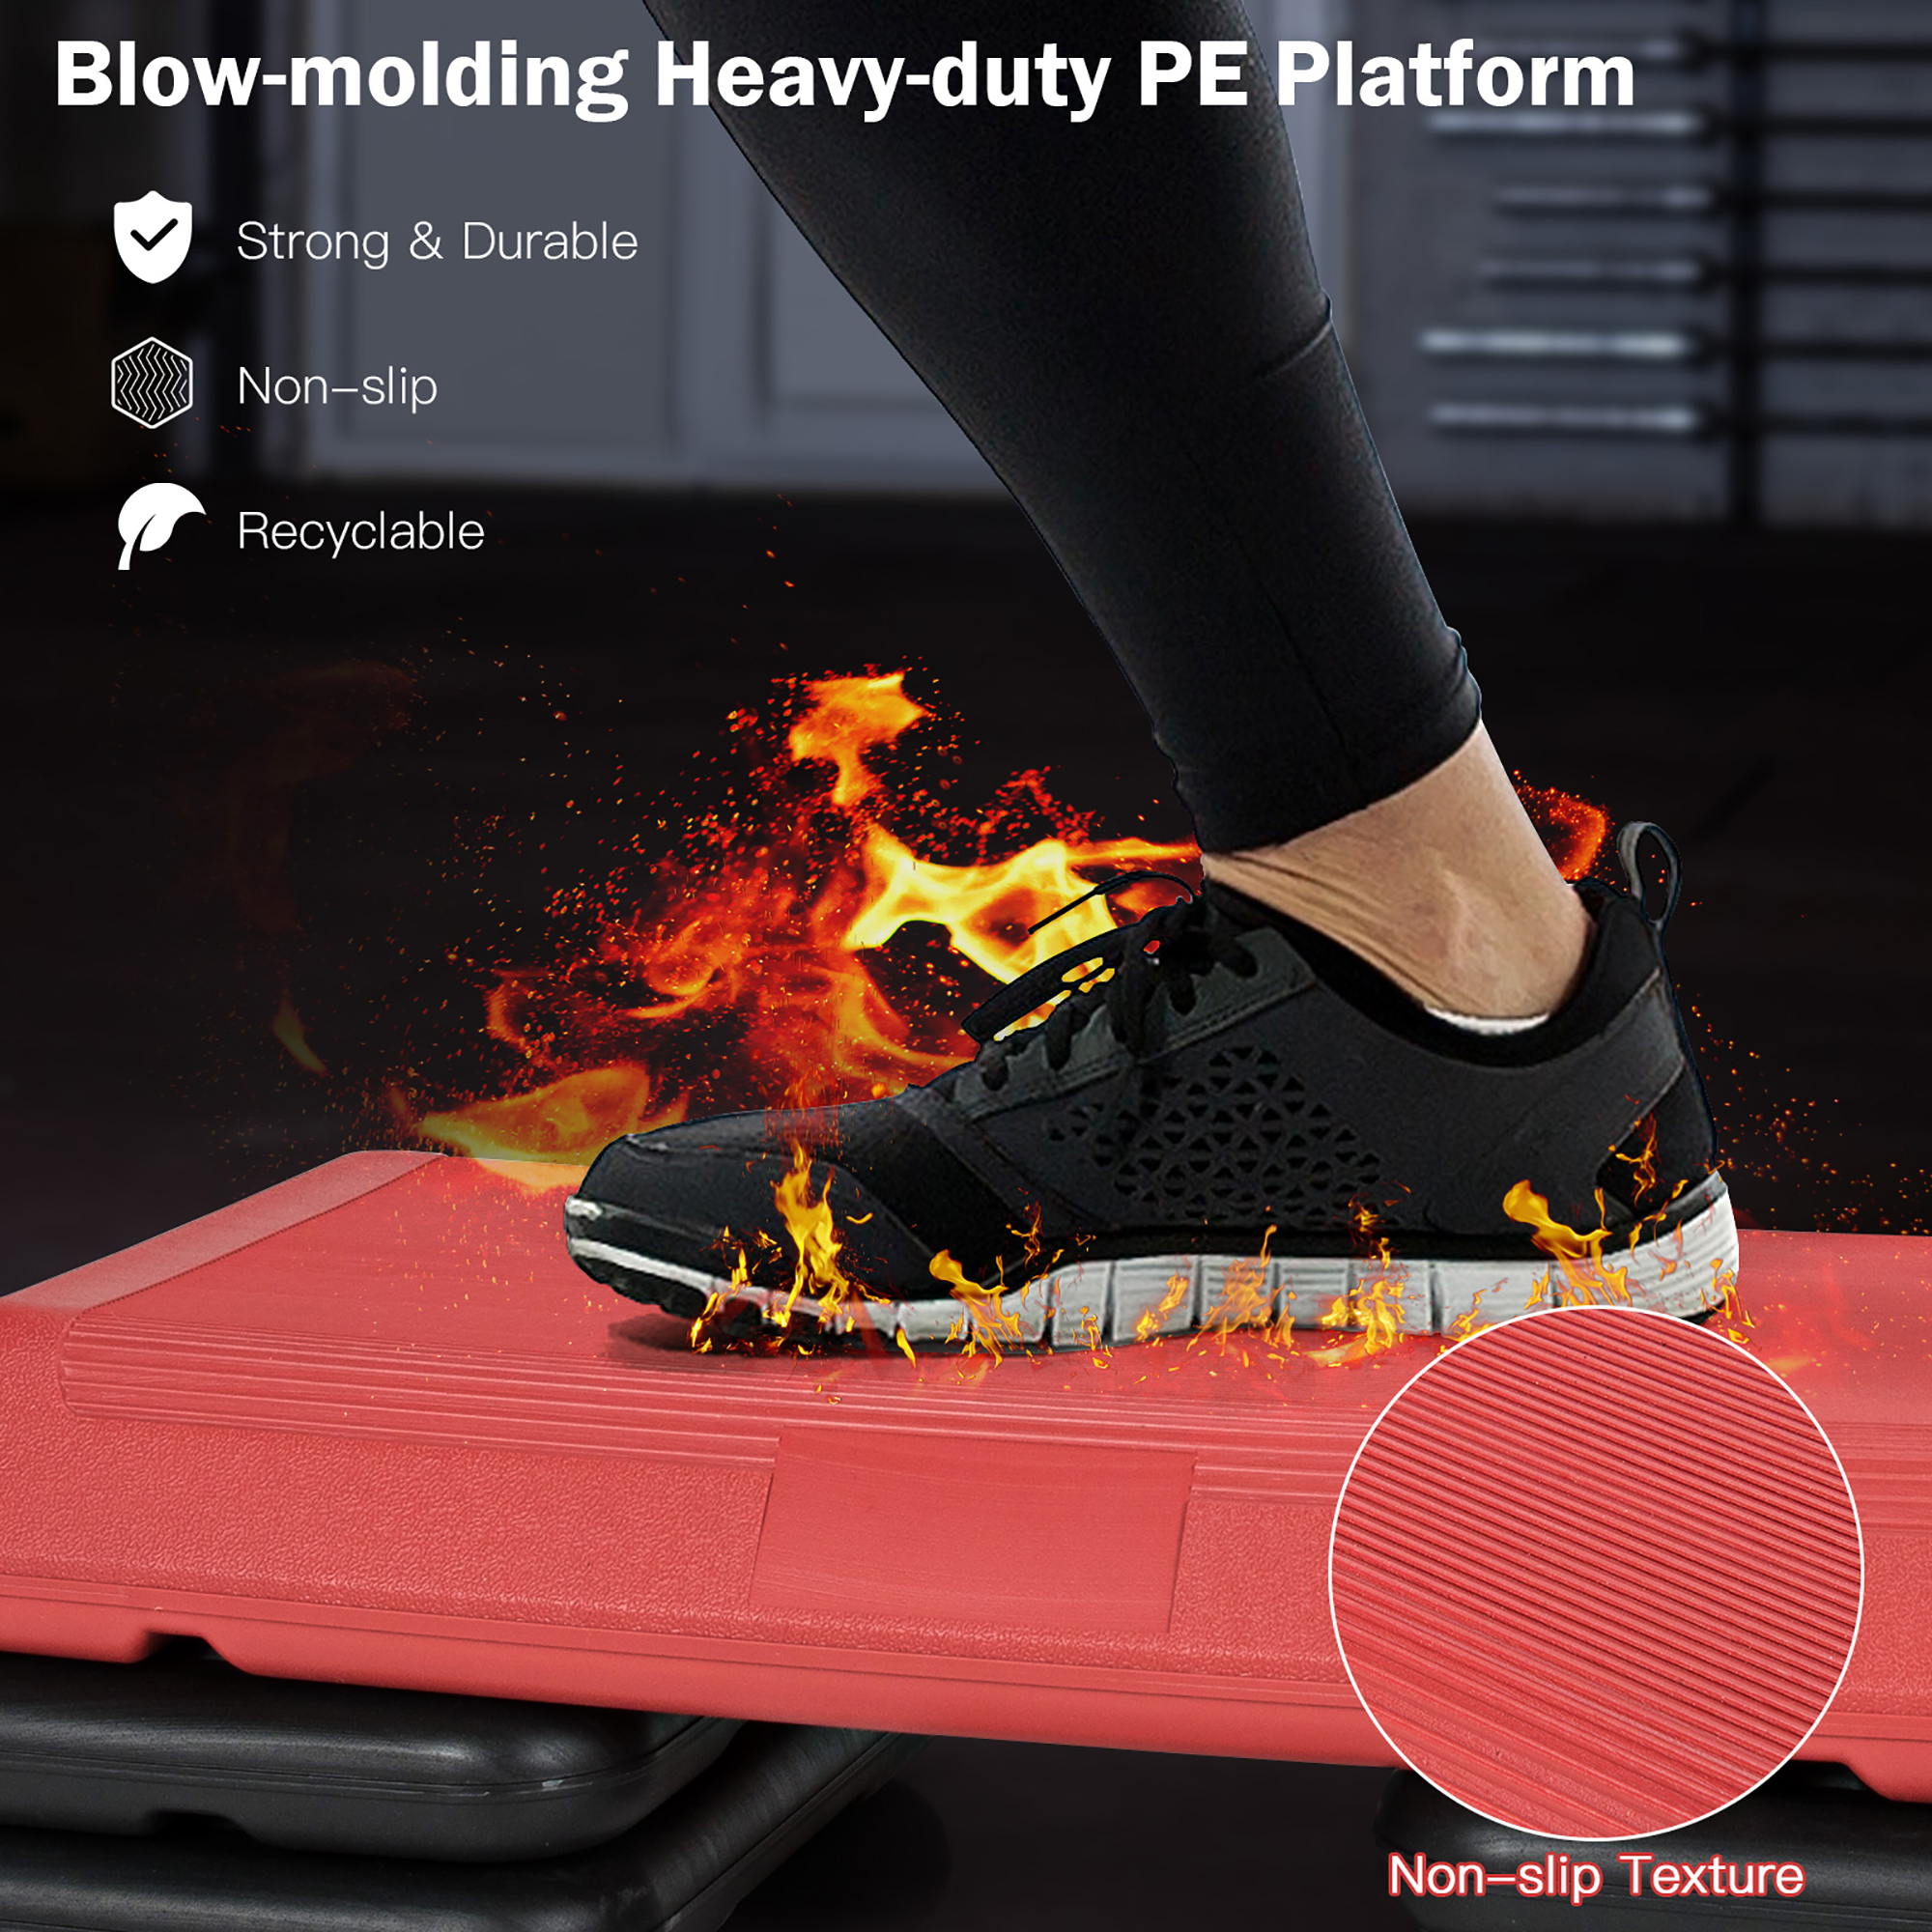 Costway 29'' Adjustable Workout Fitness Aerobic Stepper Exercise Platform W/Riser 4'' -6'' -8 Red